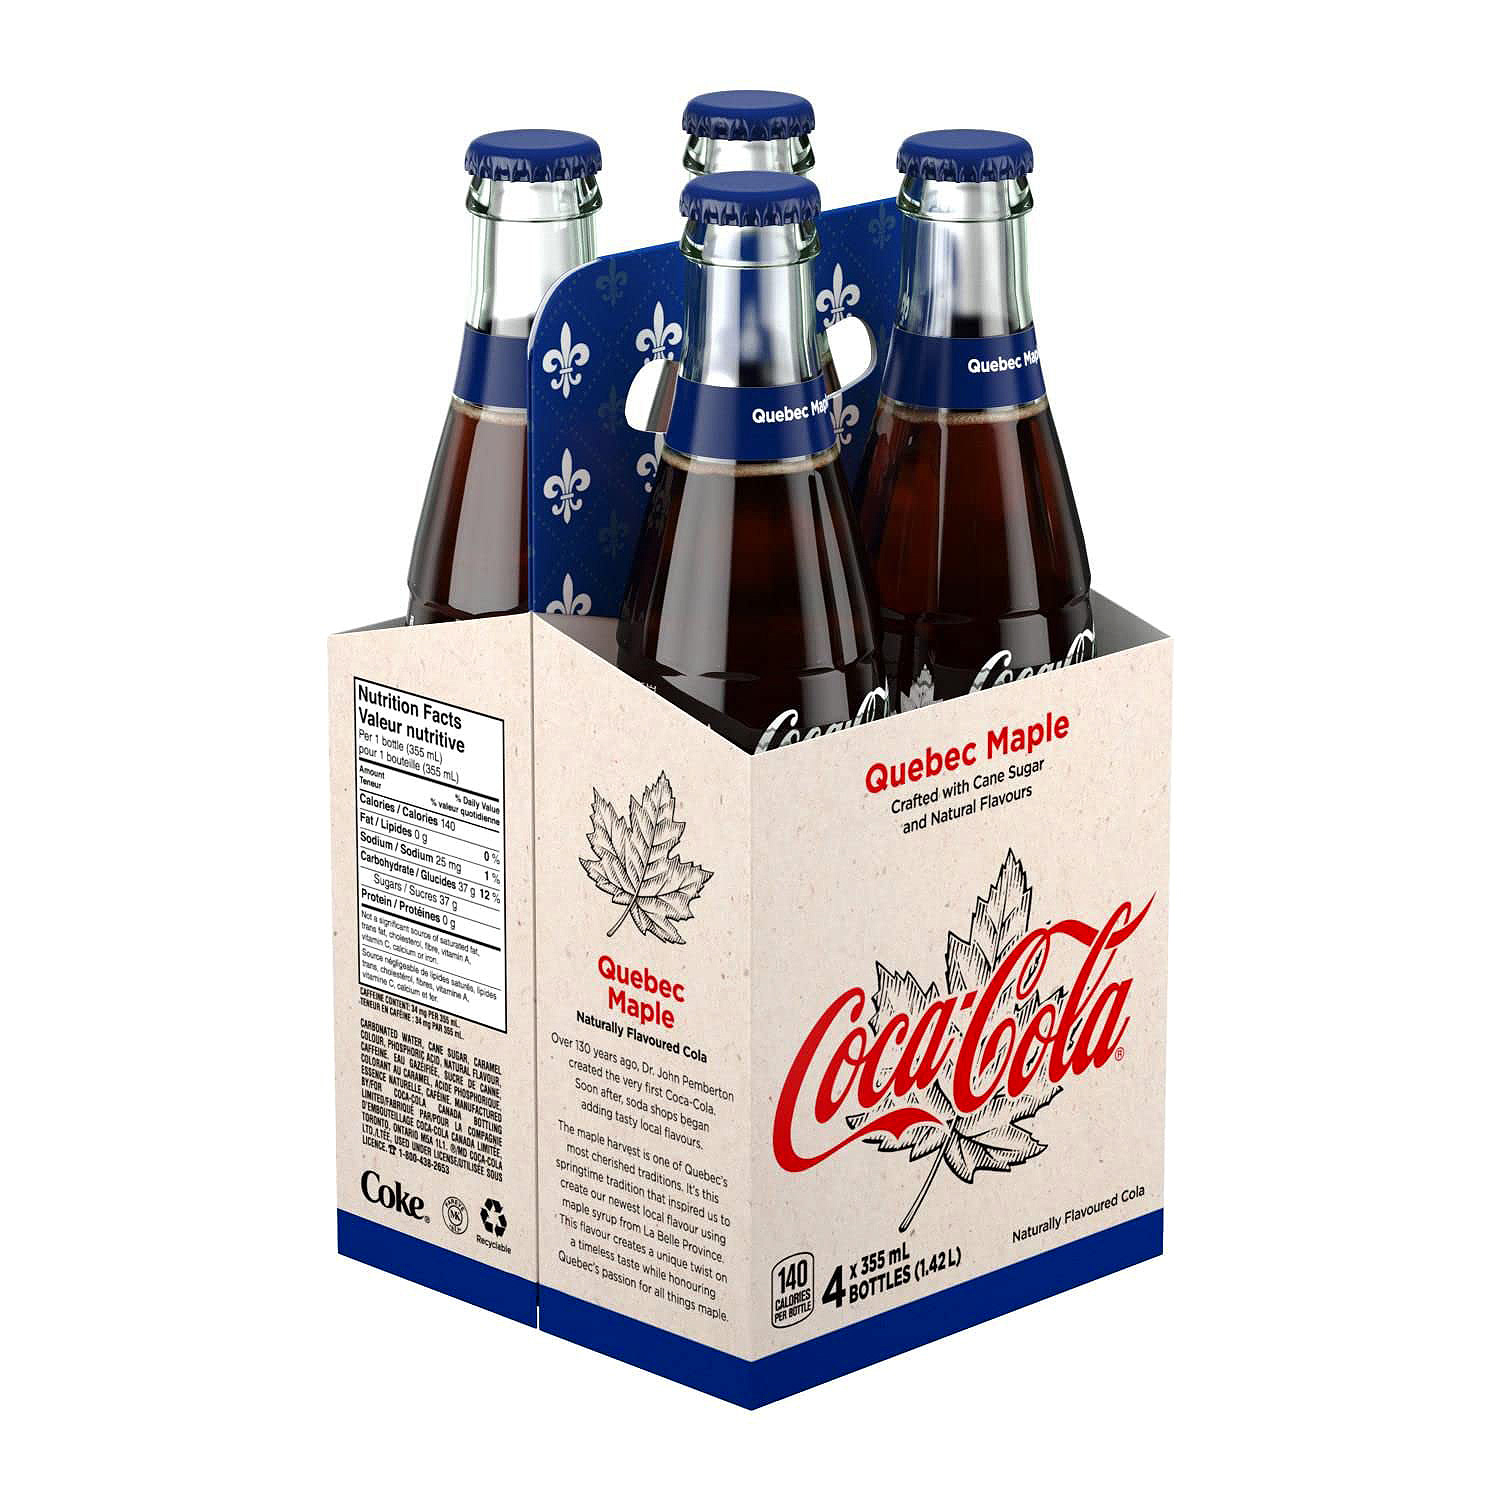 Coca-Cola's Vintage Inspired Packaging Design by Steven Noble